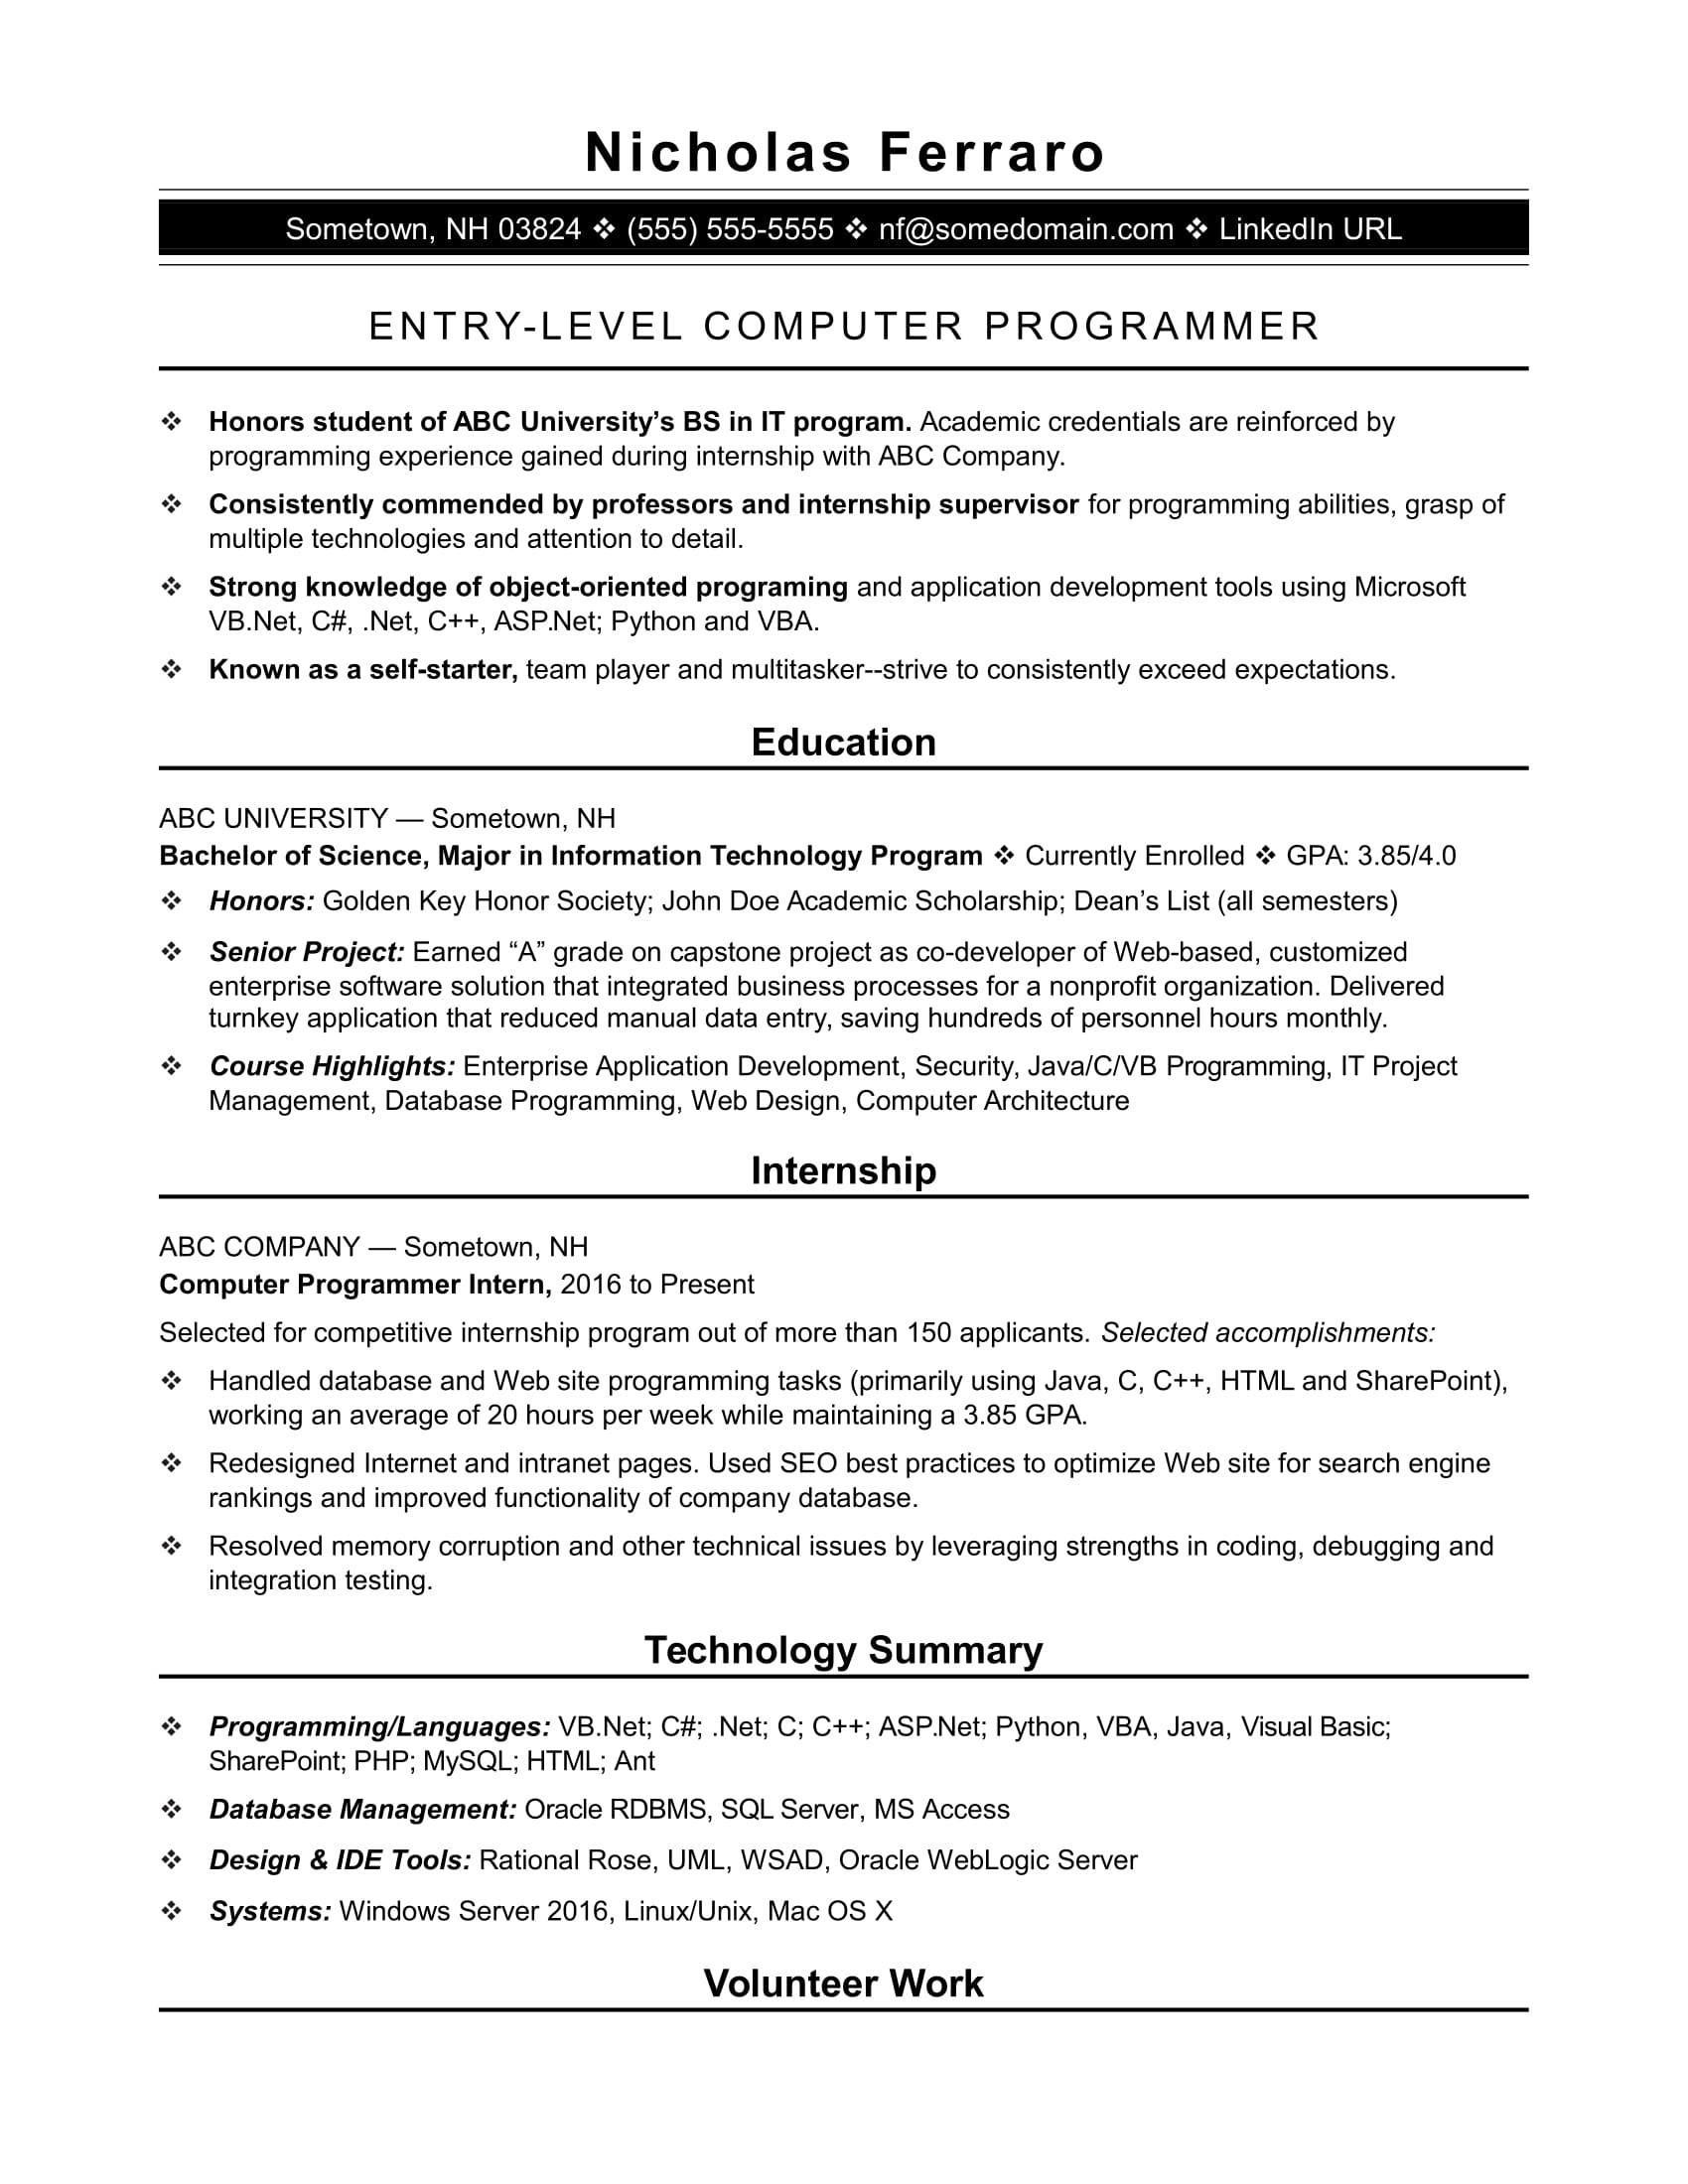 Jr Level Position Spark Streaming and Python Sample Resume Entry-level Programmer Resume Monster.com